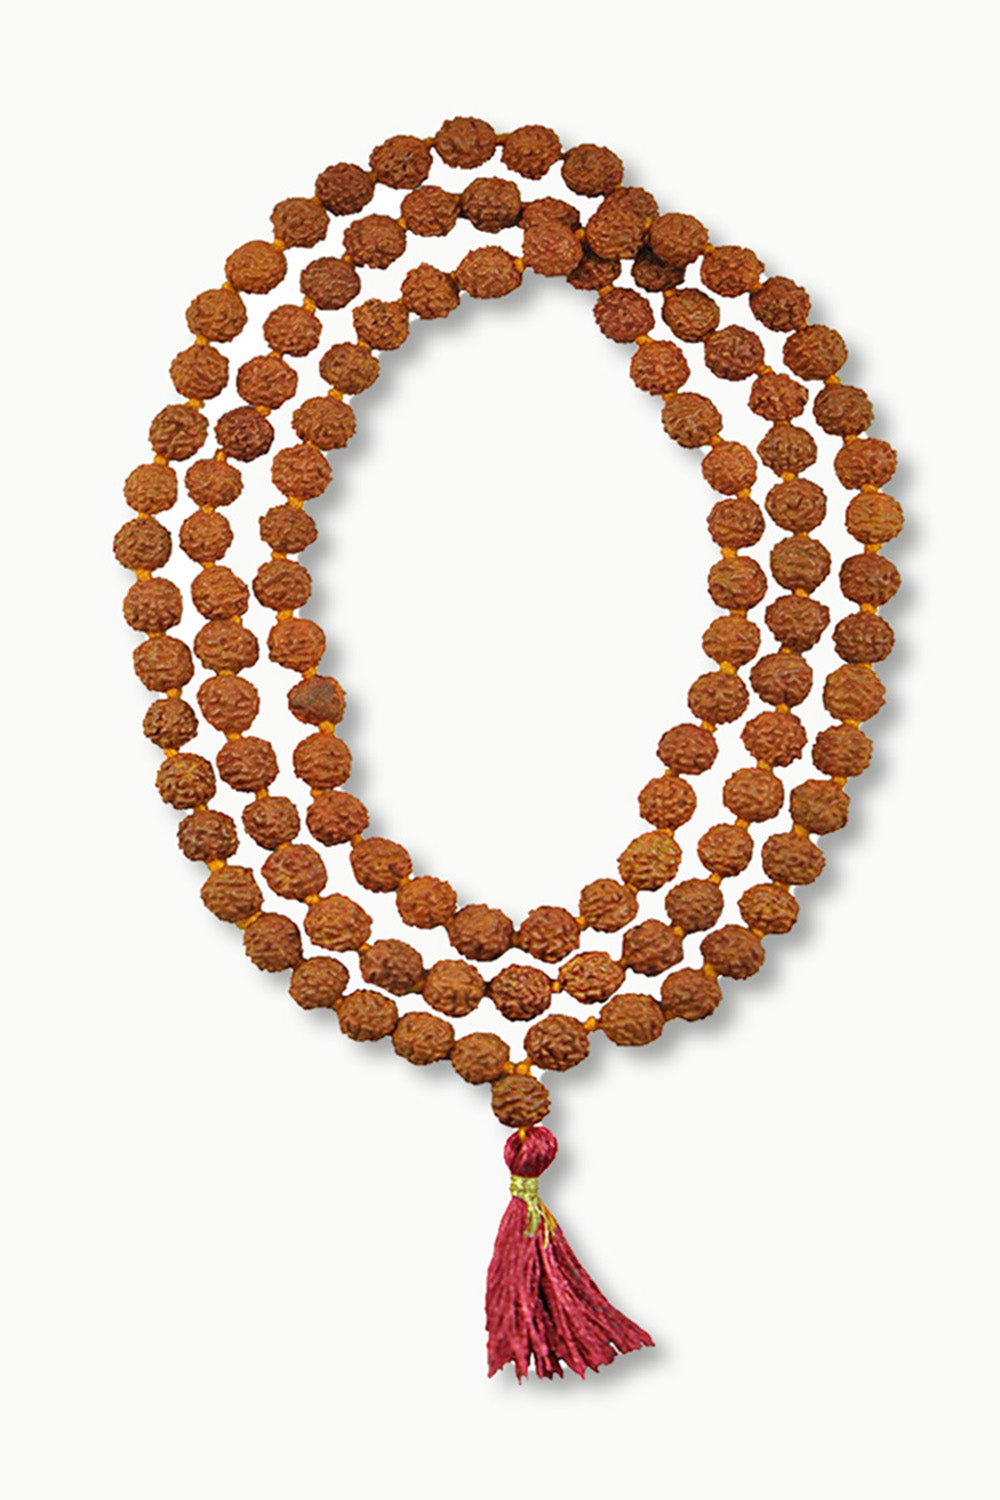 10 mm Prayer Beads - Hare Ram Krishna Hand Knotted Mala Beads Necklace -  Energized Karma Nirvana Meditation 108 1 Beads For Awakening Chakra